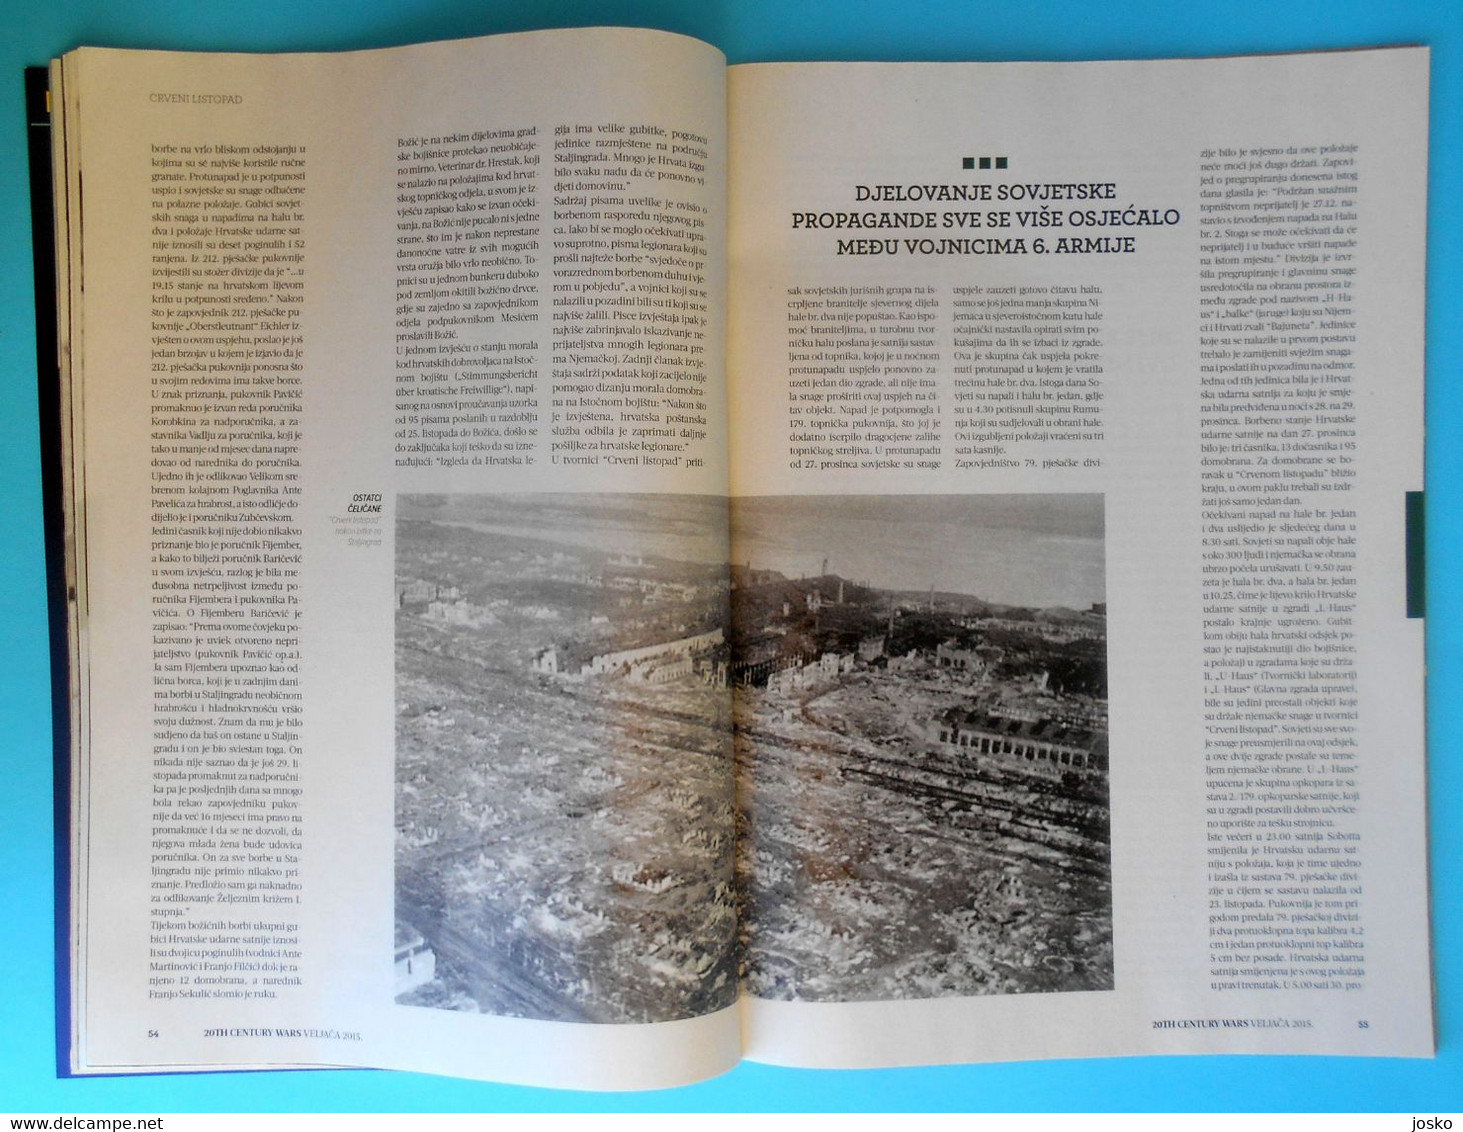 20th CENTURY WARS - Croatian magazine * Stalingrad-Red October Battle of Mukden Odyssey of a sailor from Cruiser Emden